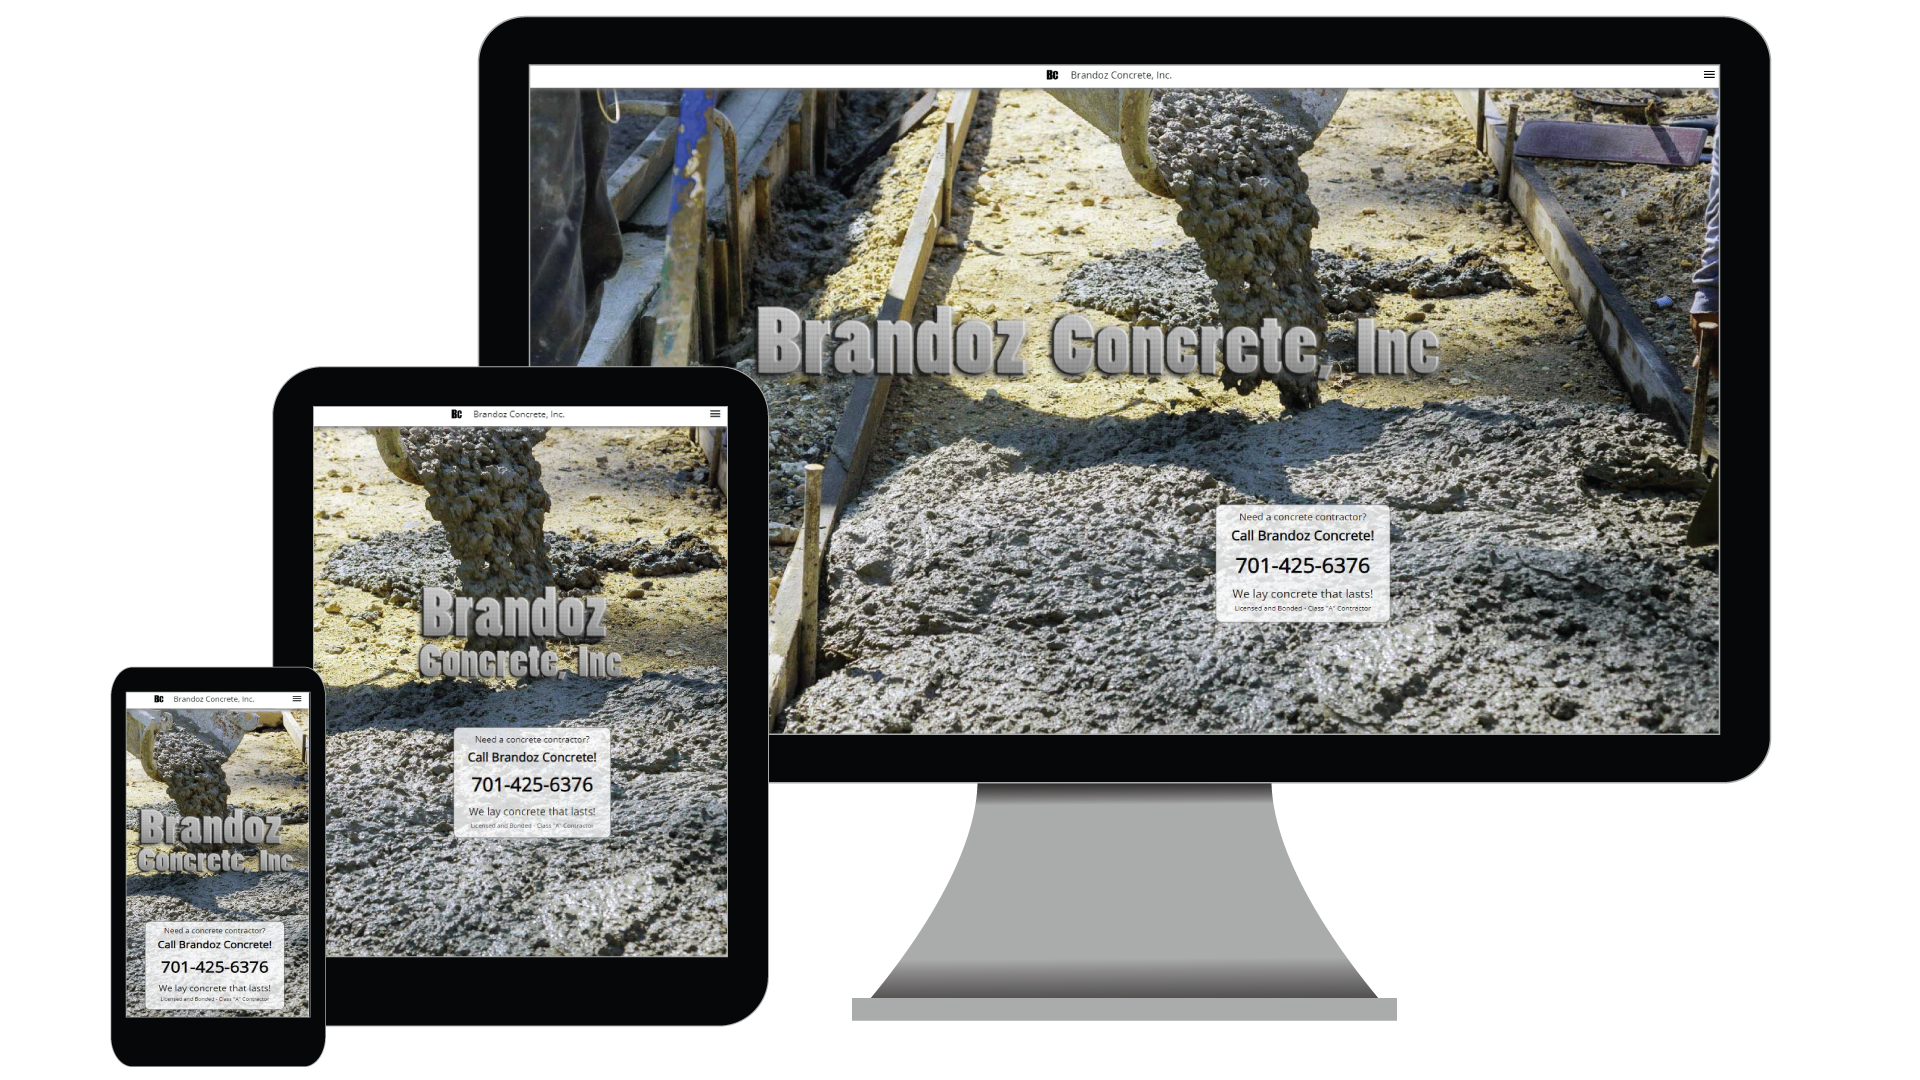 Brandoz Concrete